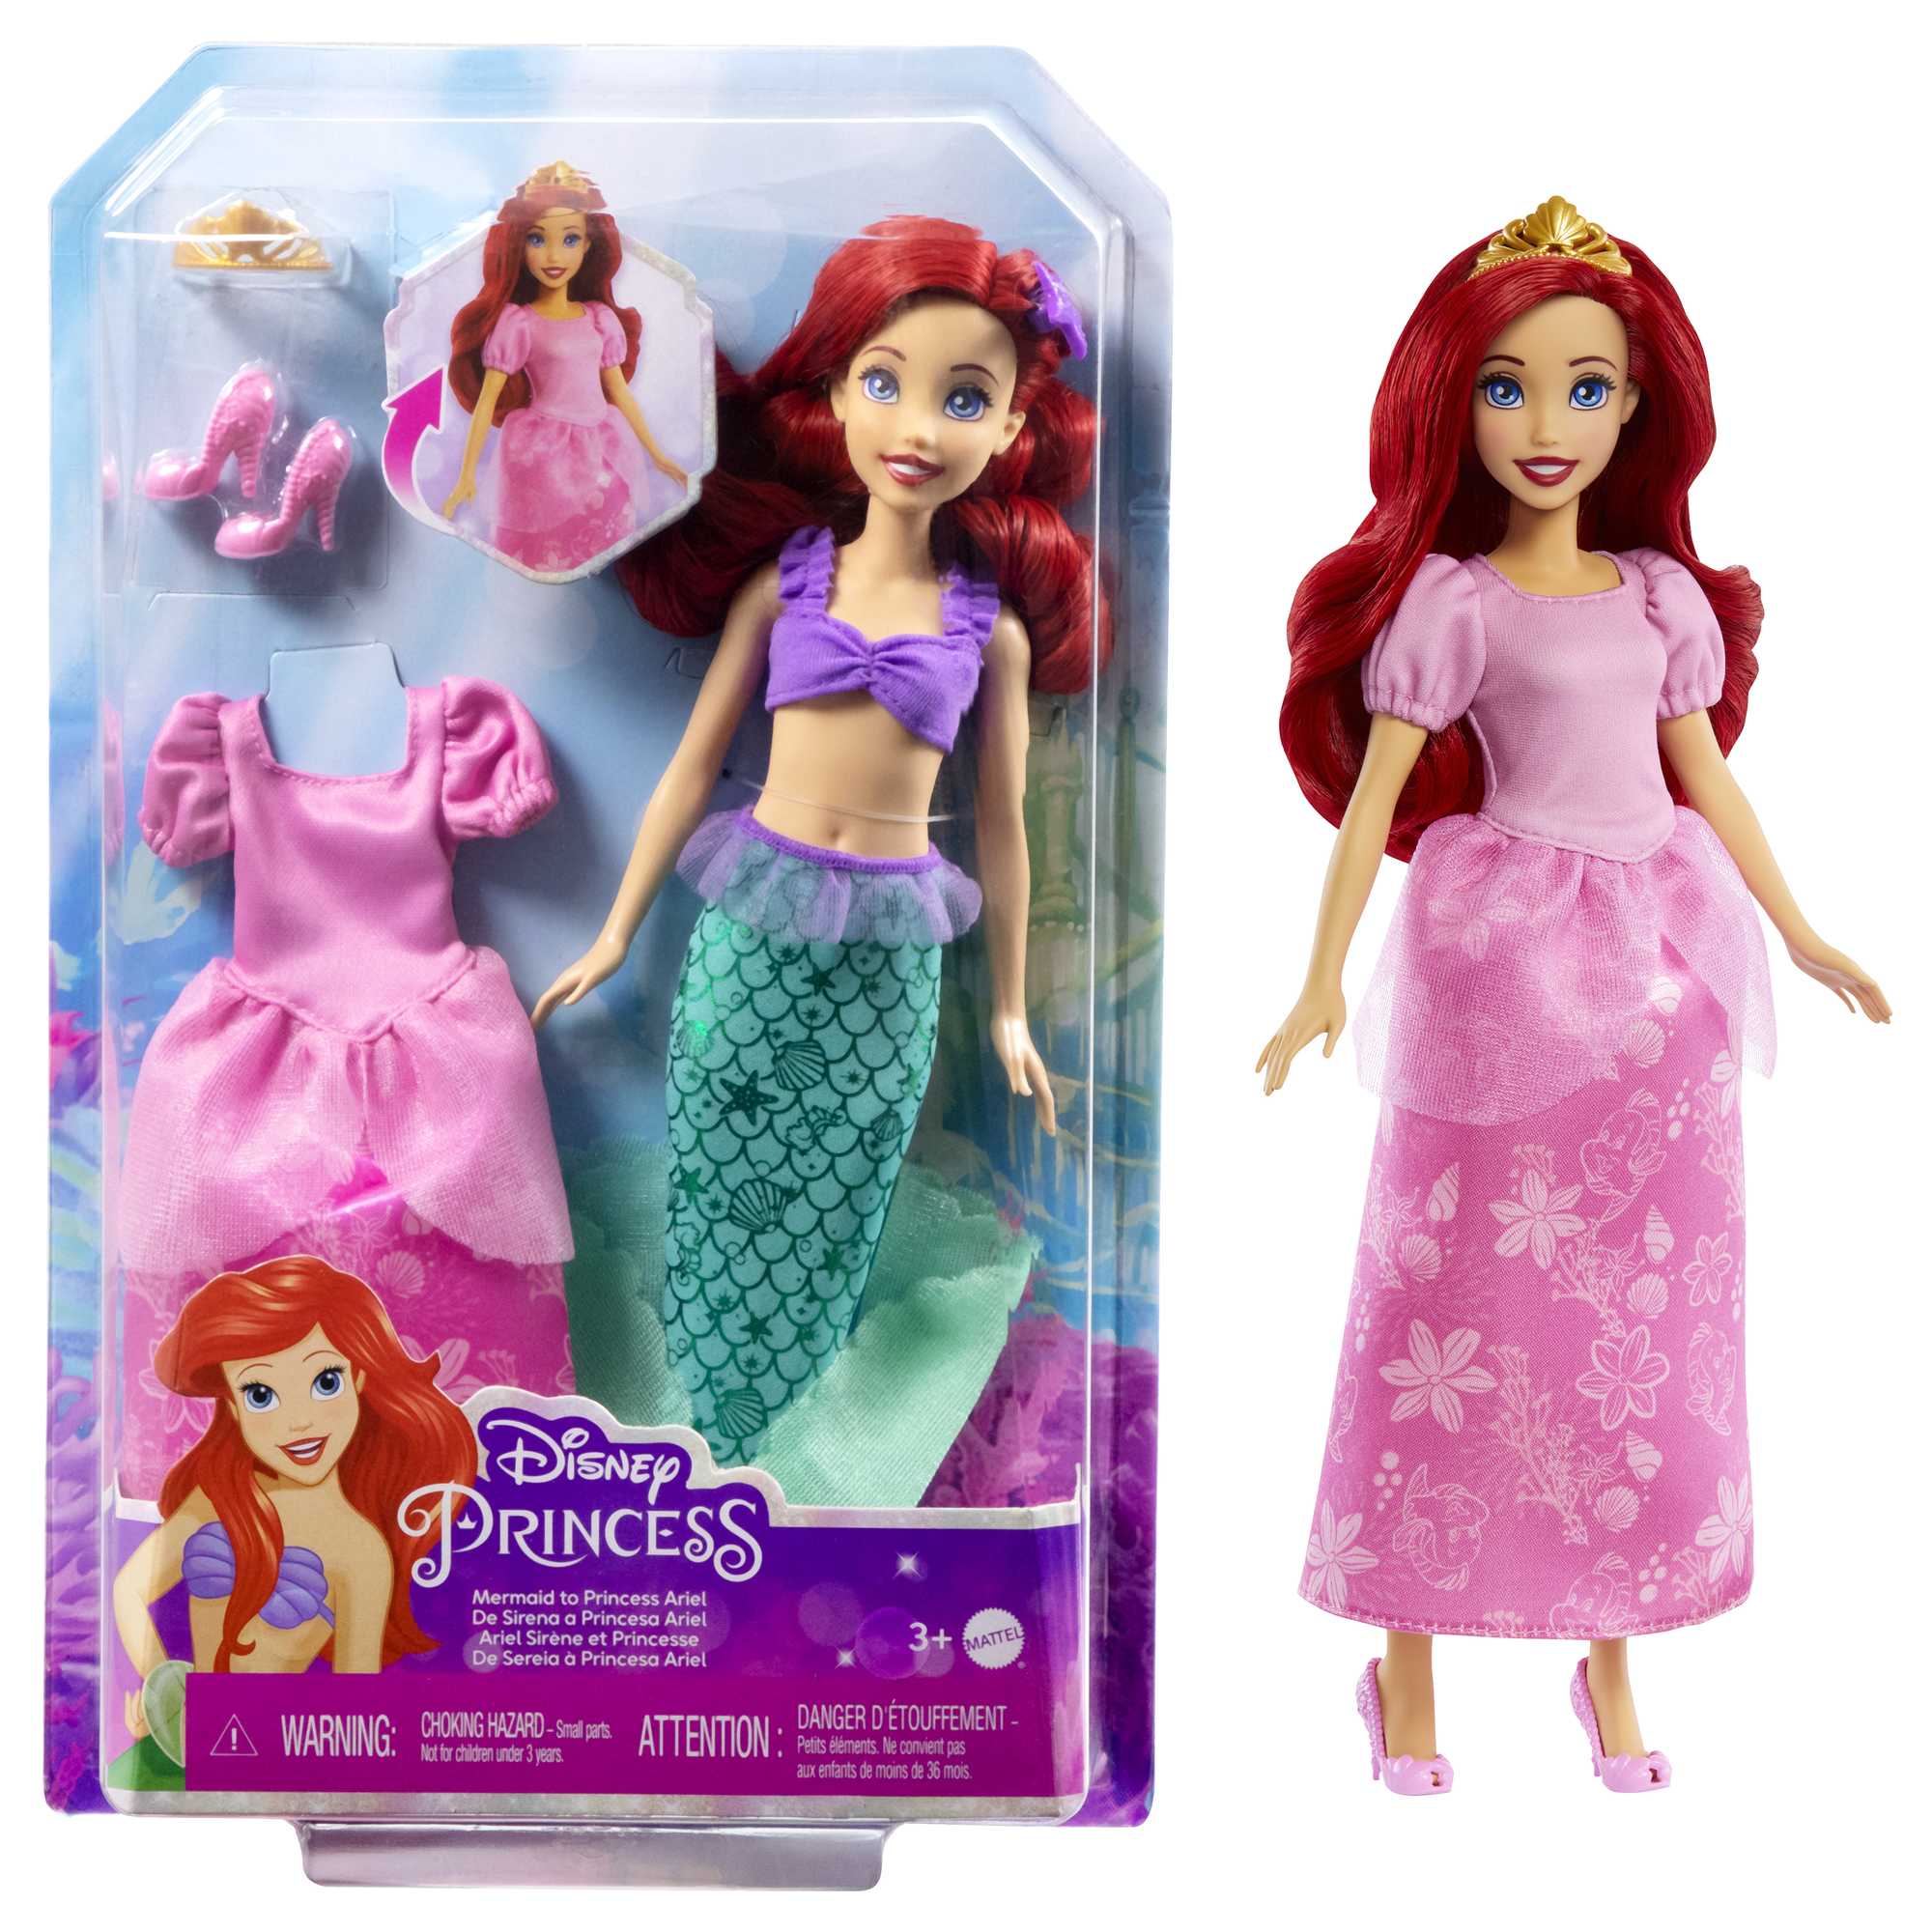 Disney Princess Mermaid To Princess Ariel | Mattel